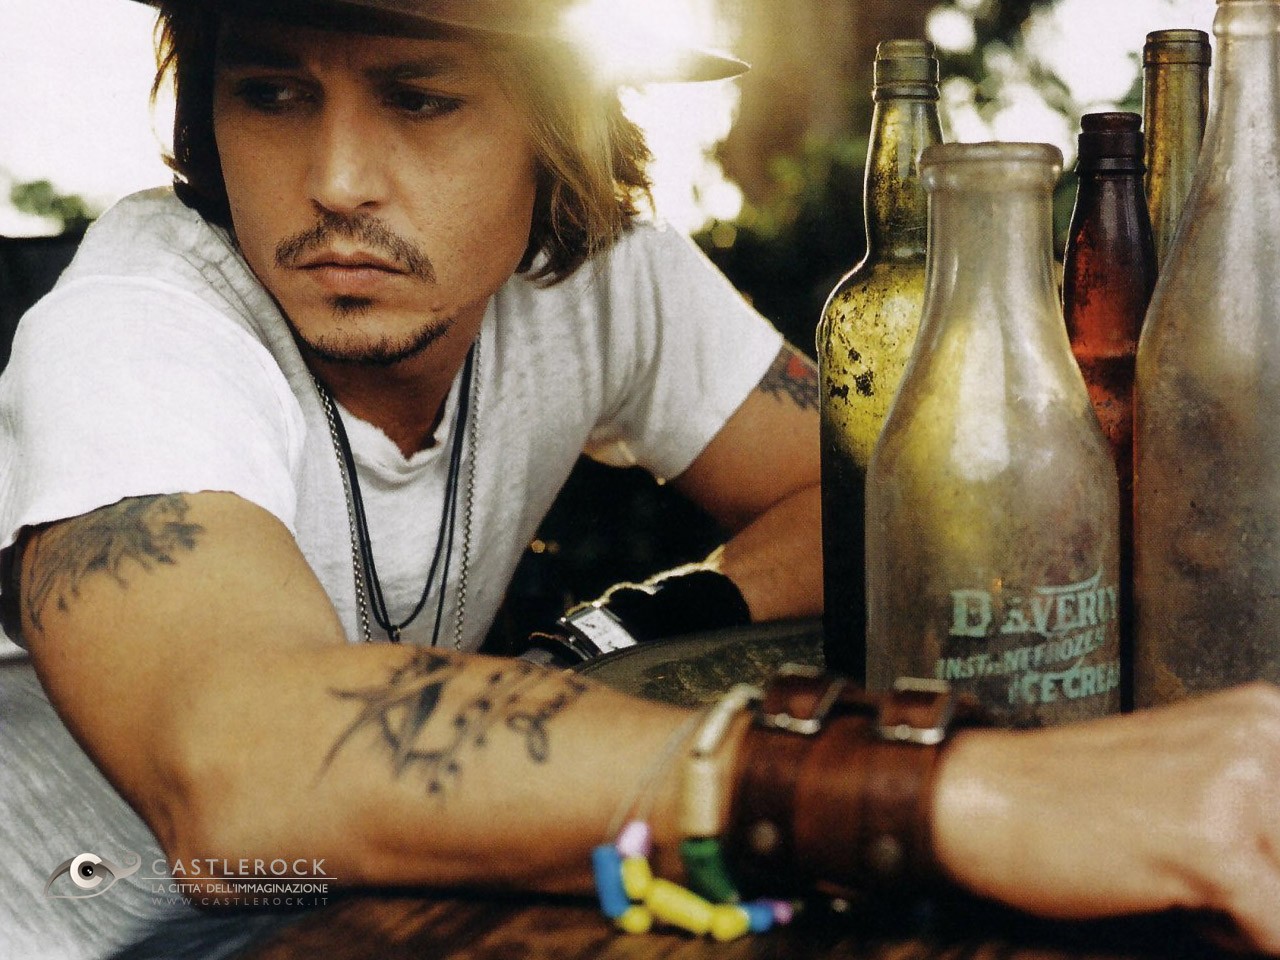 http://3.bp.blogspot.com/-GMj8Vlo_y_Y/TyTsGR2o2wI/AAAAAAAAABg/aZgr9ULM-aQ/s1600/Favorite+Celebrity+Tattoo+Design++Johnny+Depp++represents+the+people+in+his+life.jpg